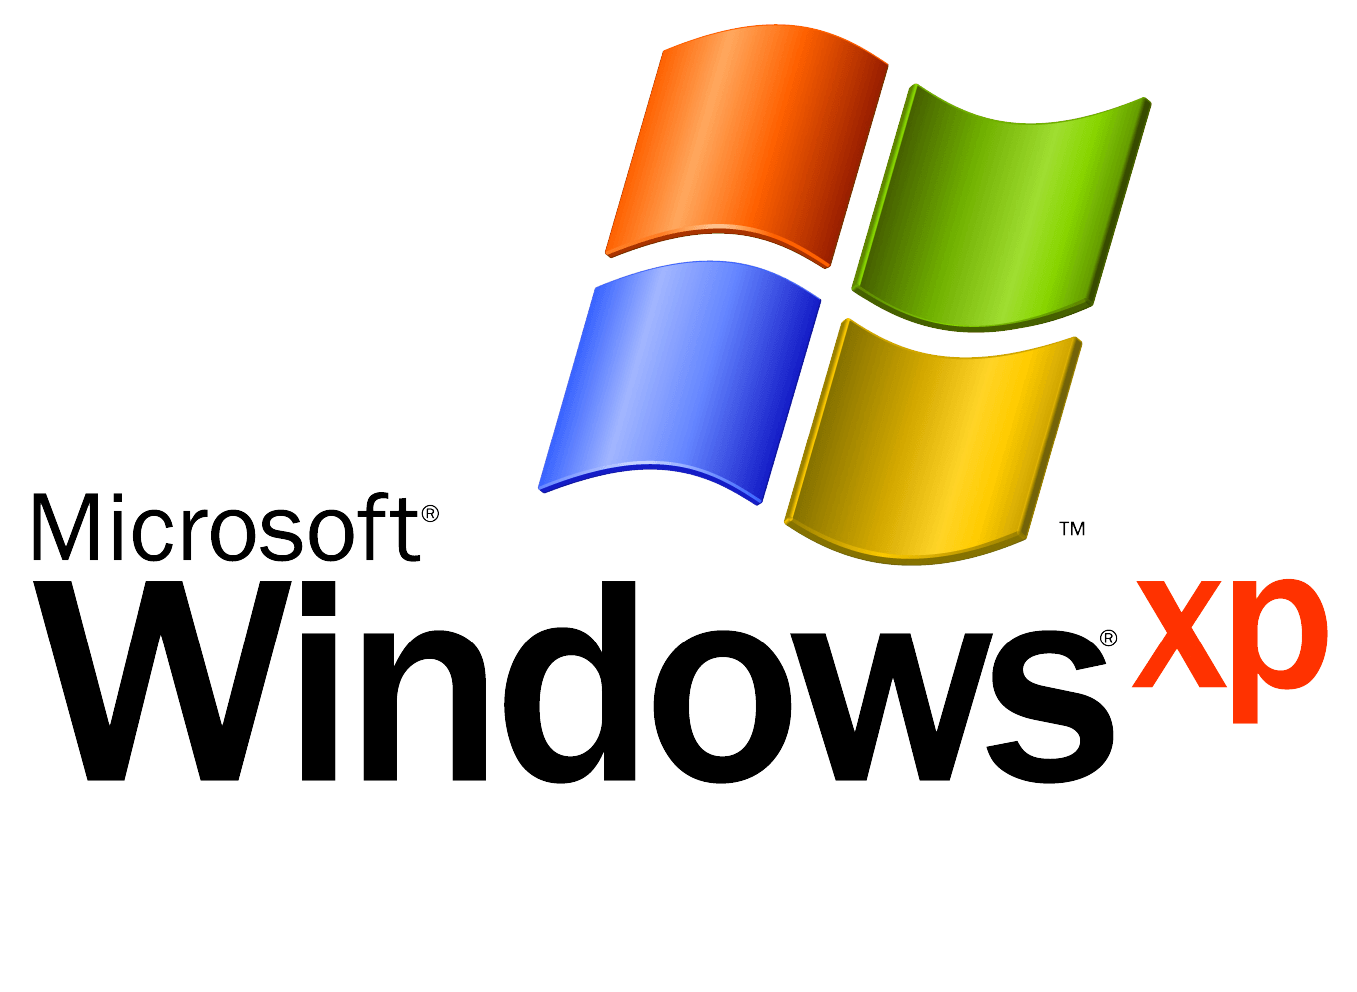 Windows 2001 Logo - Image - Windows XP Logo 2001-2007.png | Logopedia | FANDOM powered ...